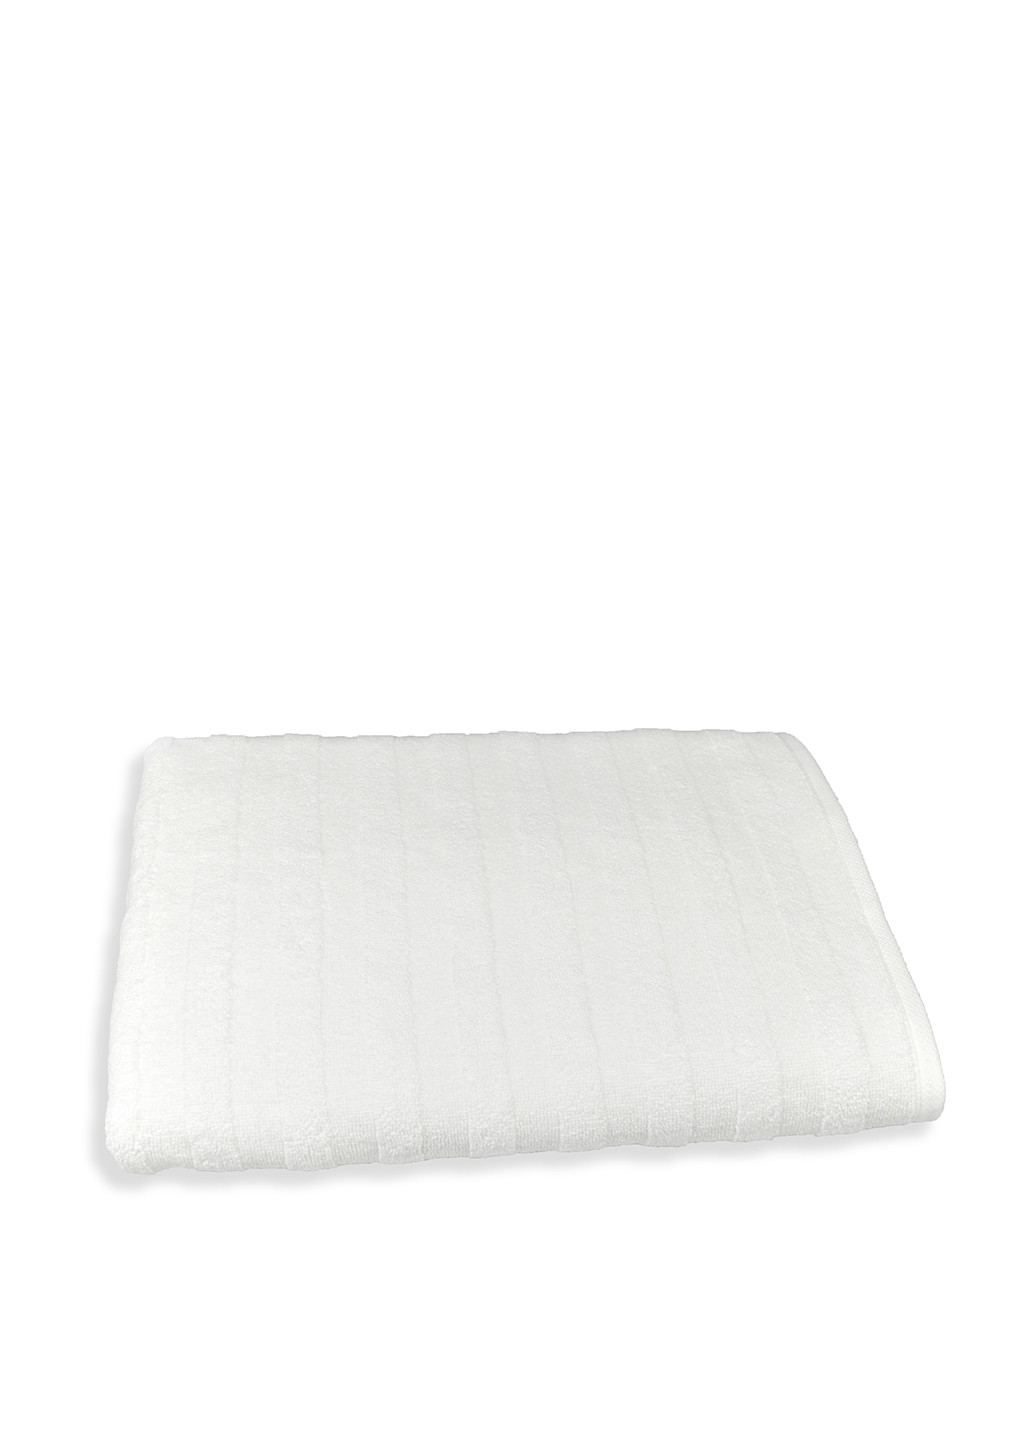 No Brand полотенце, 70х140 см однотонный белый производство - Турция